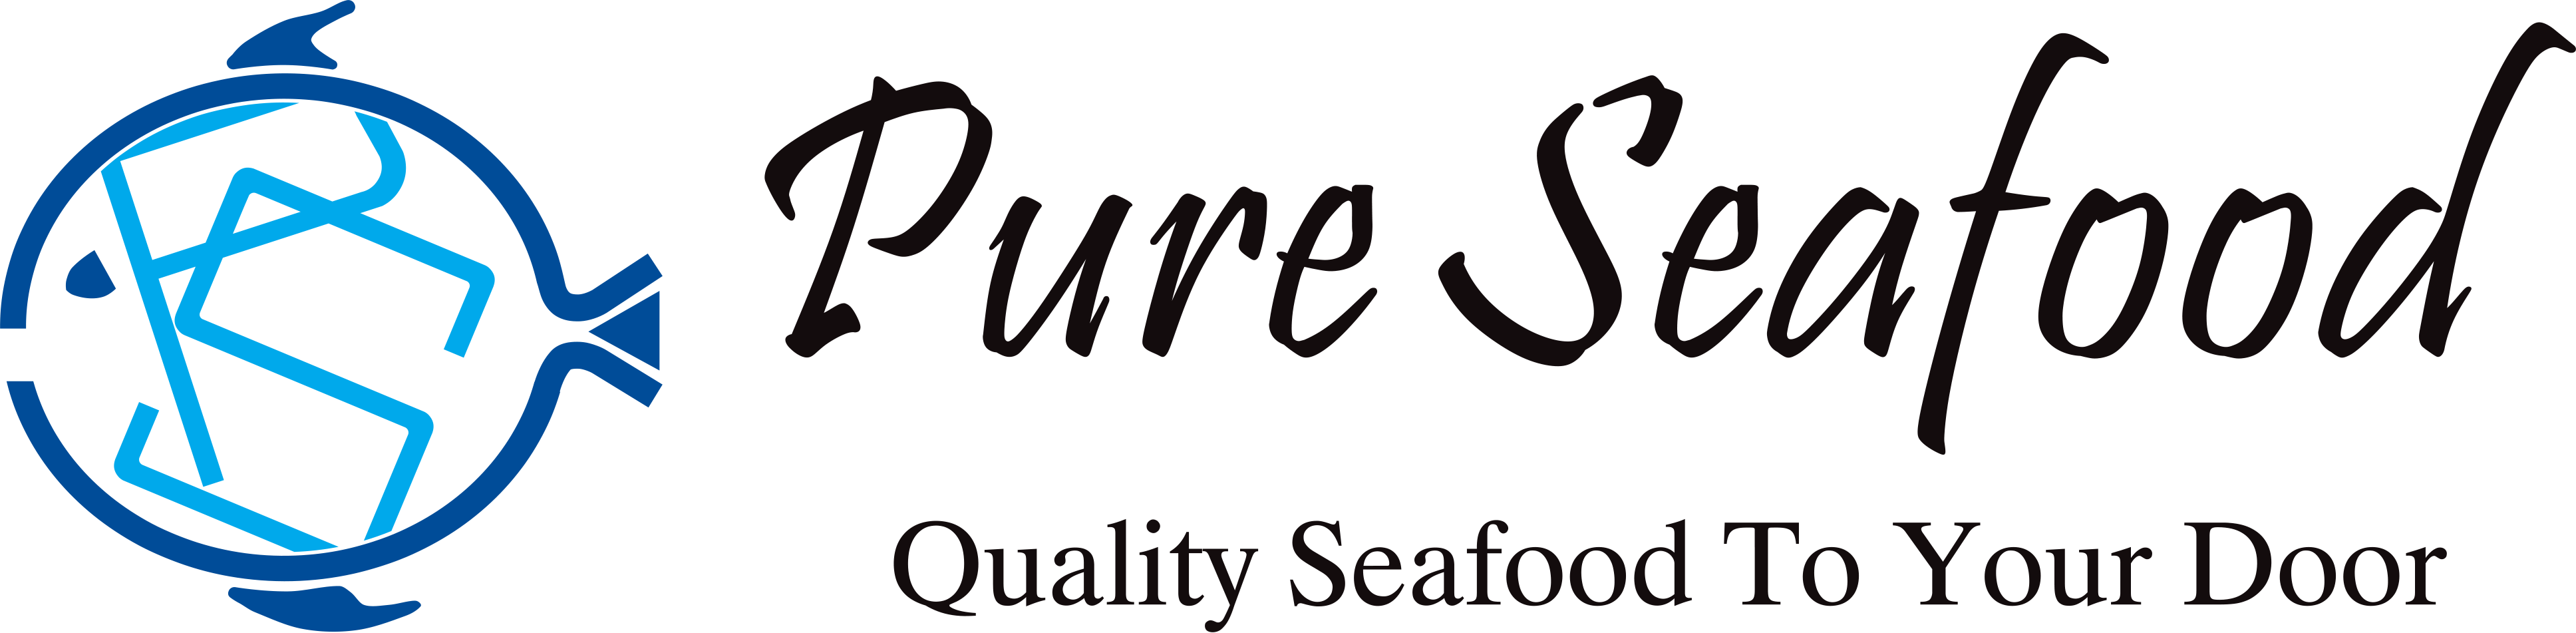 Pure Seafood